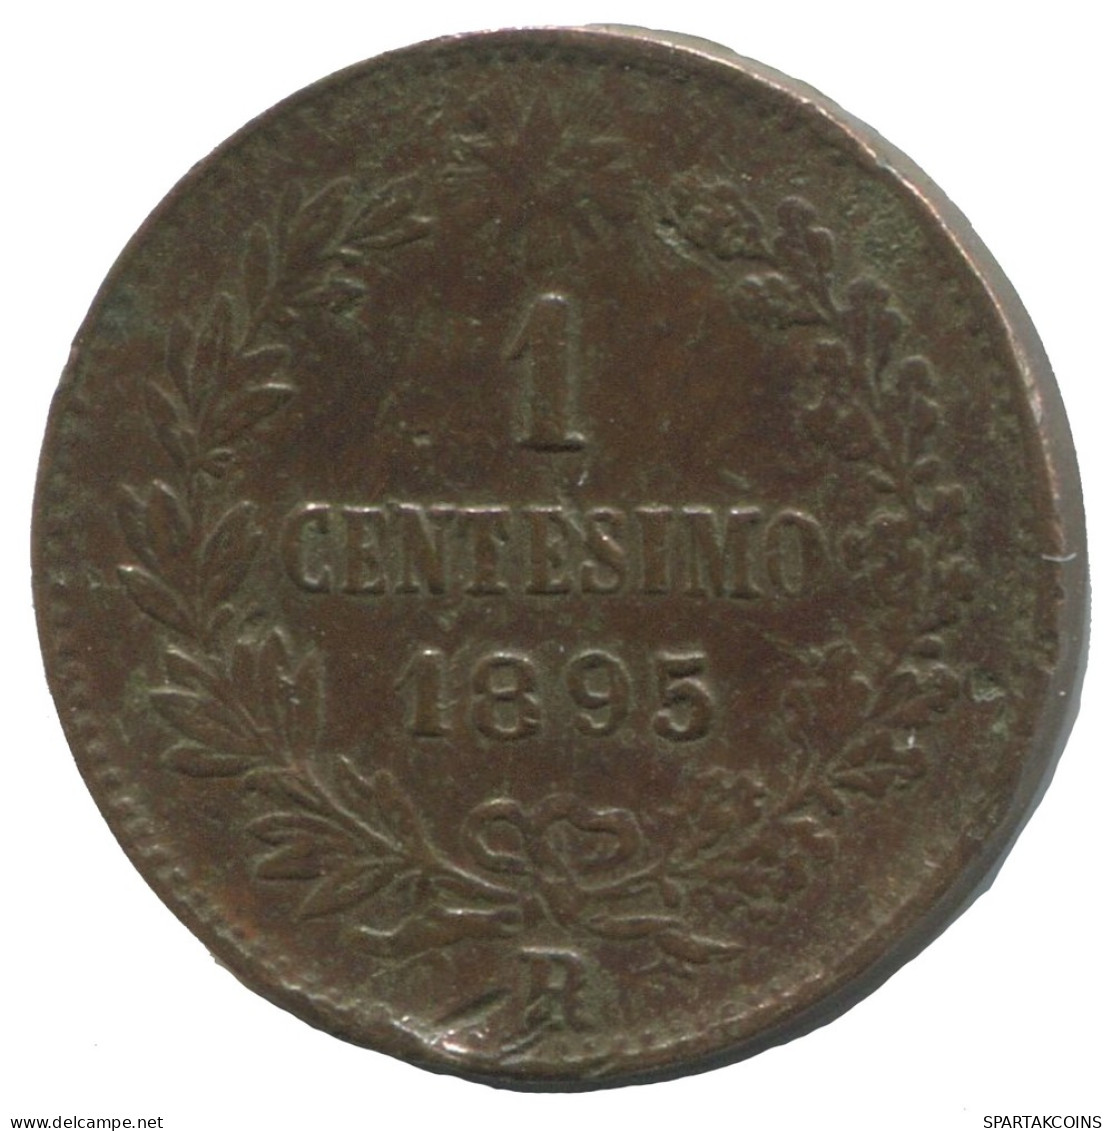 ITALY 1 Centesimo 1895 R Umberto I #AC186.8.F - Parma